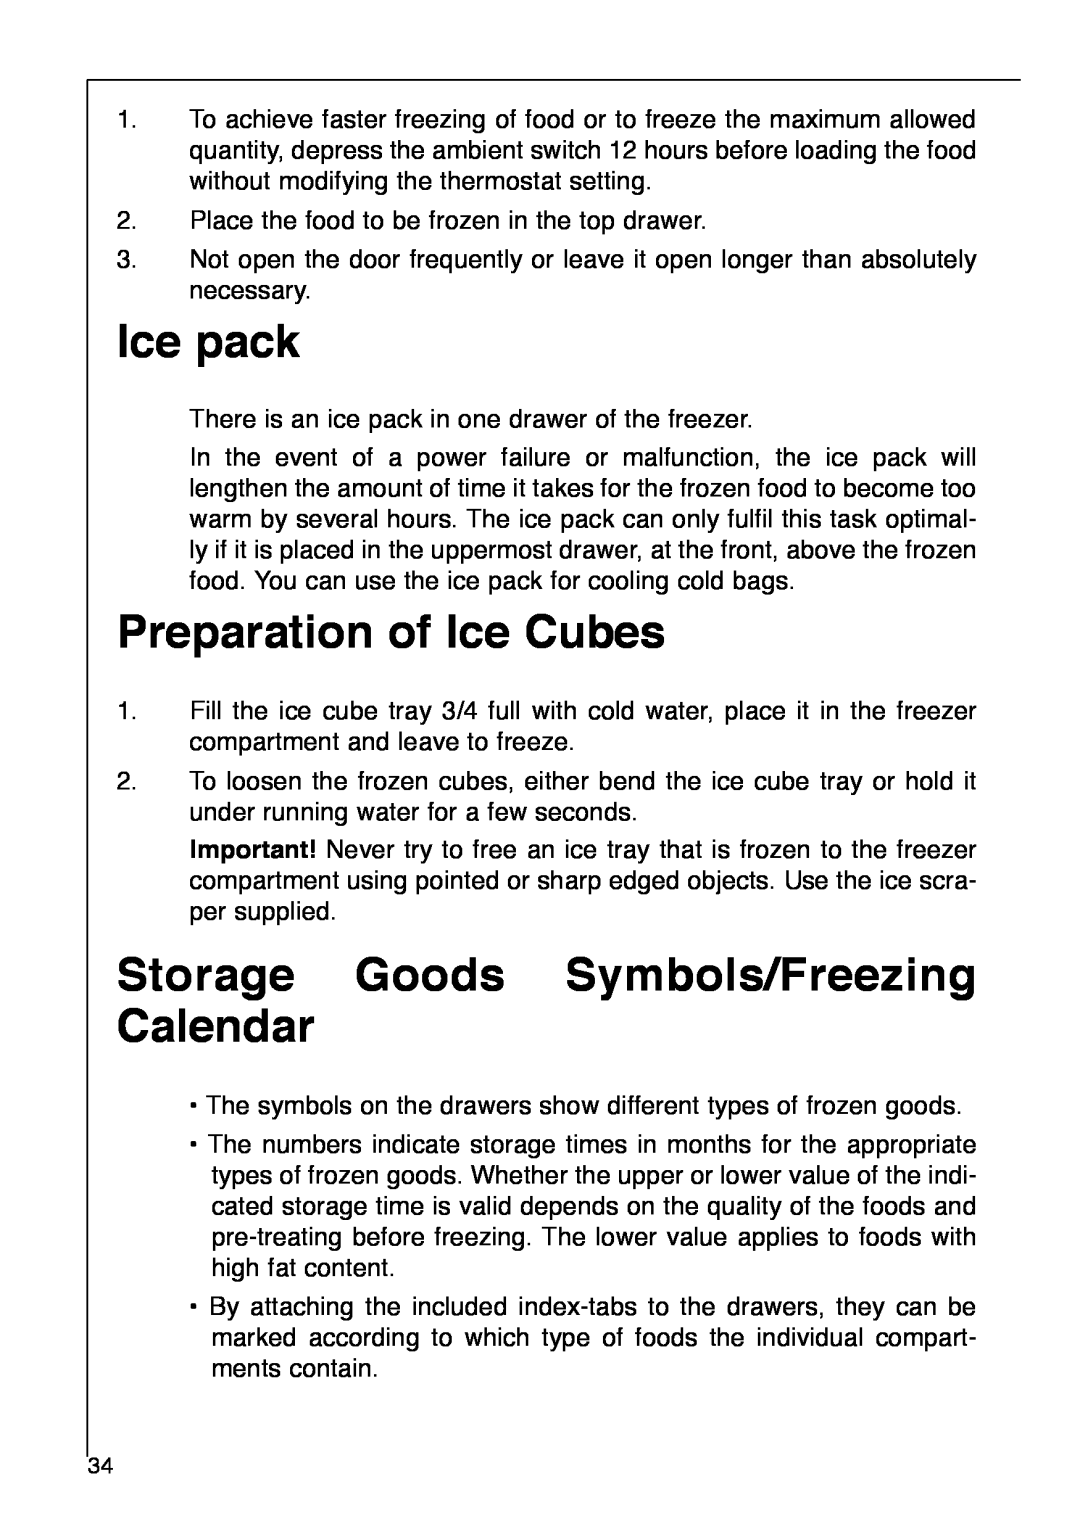 AEG 2642-6 KG manual Ice pack, Preparation of Ice Cubes, Storage Goods Symbols/Freezing Calendar 